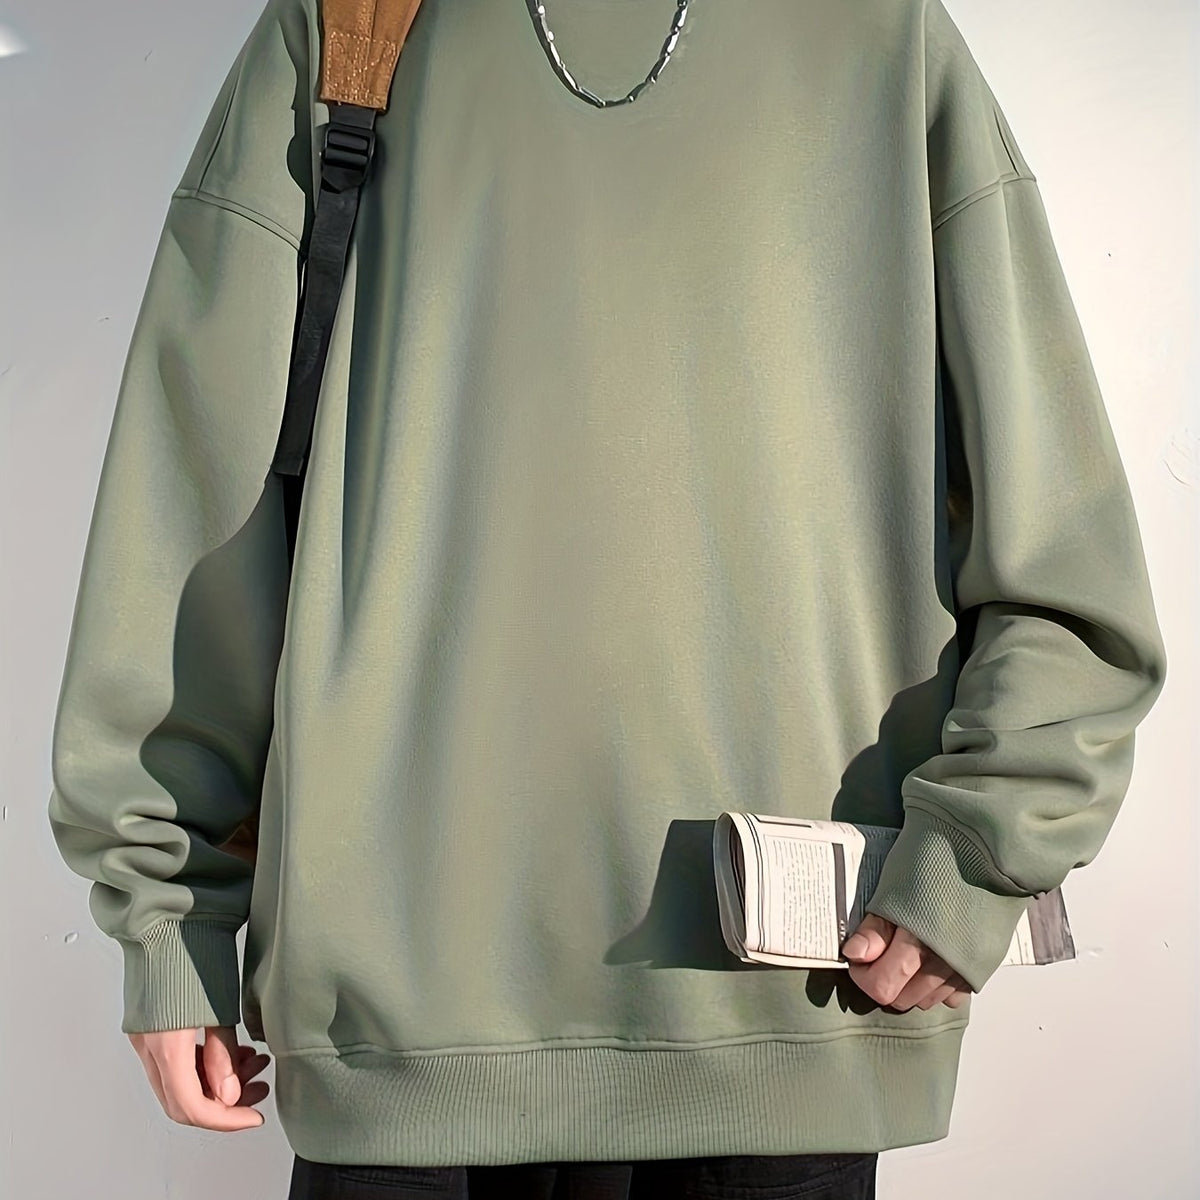 gbolsos Men's Crew Neck Sweatshirt Pullover For Men Solid Sweatshirts For Spring Fall Long Sleeve Tops